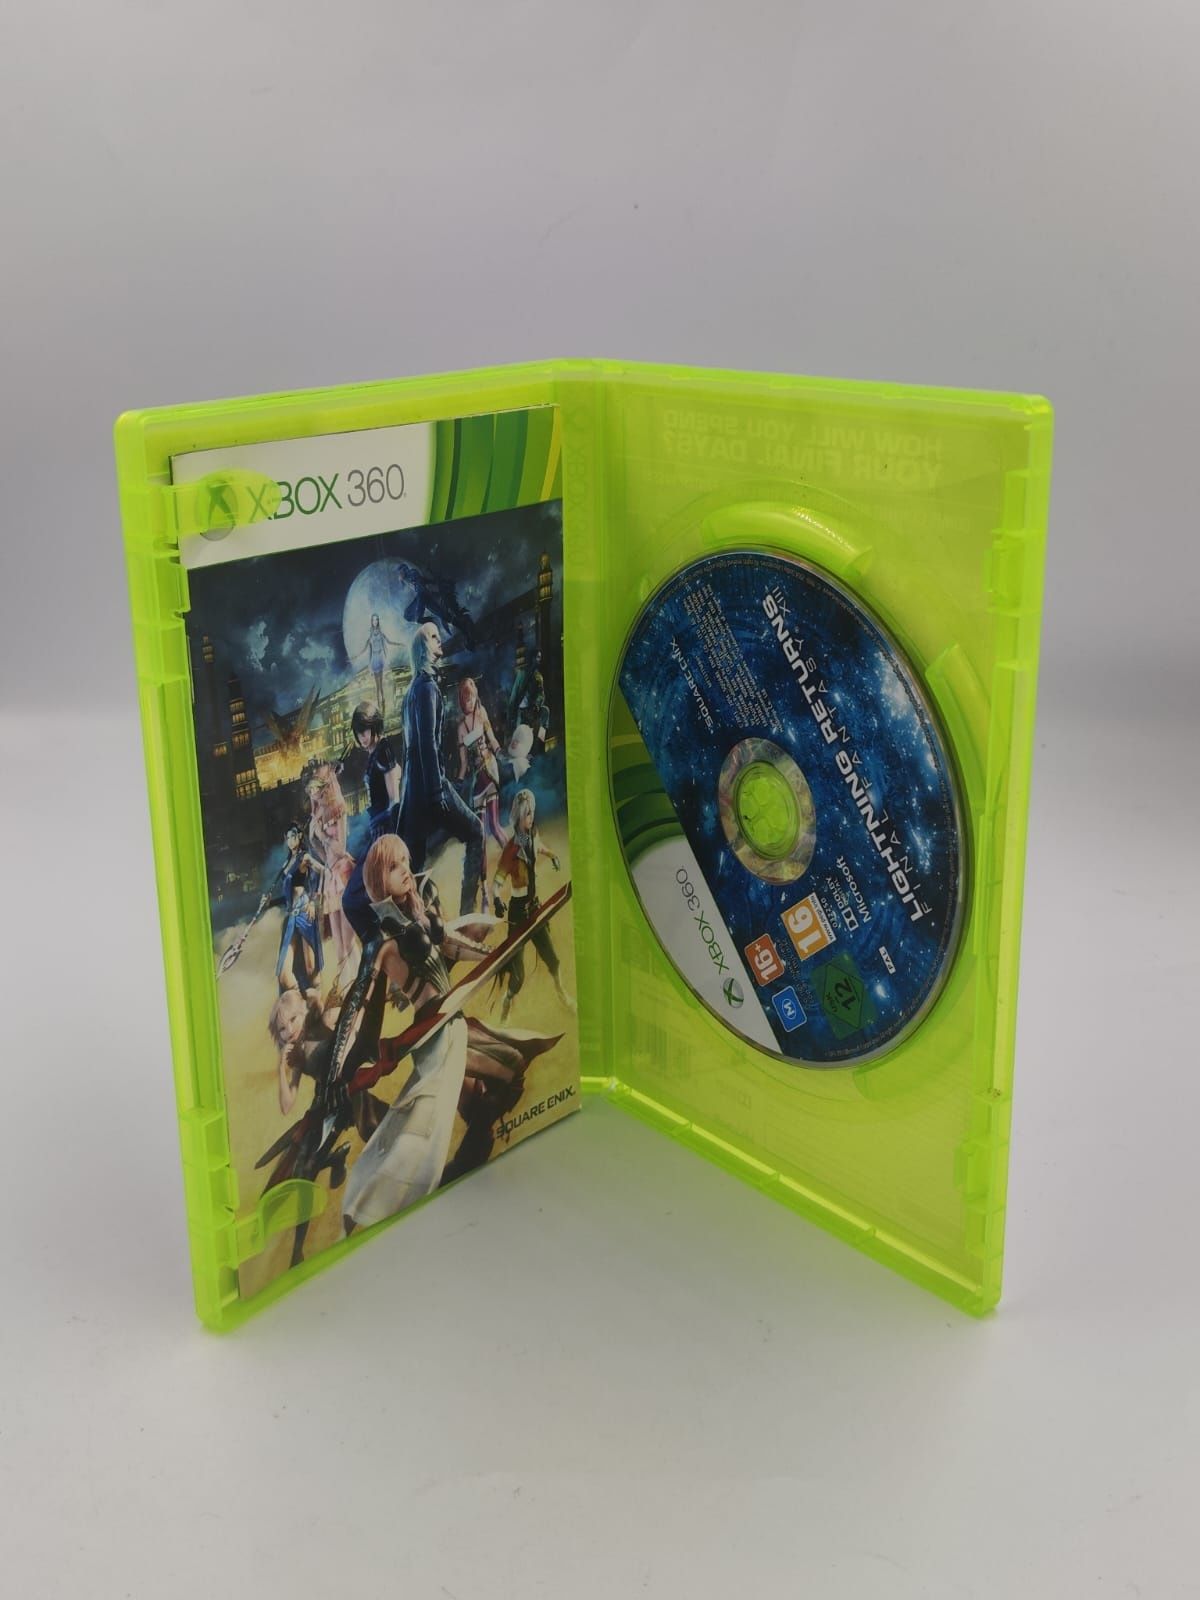 Lightning Returns Final Fantasy XIII Xbox nr 2399